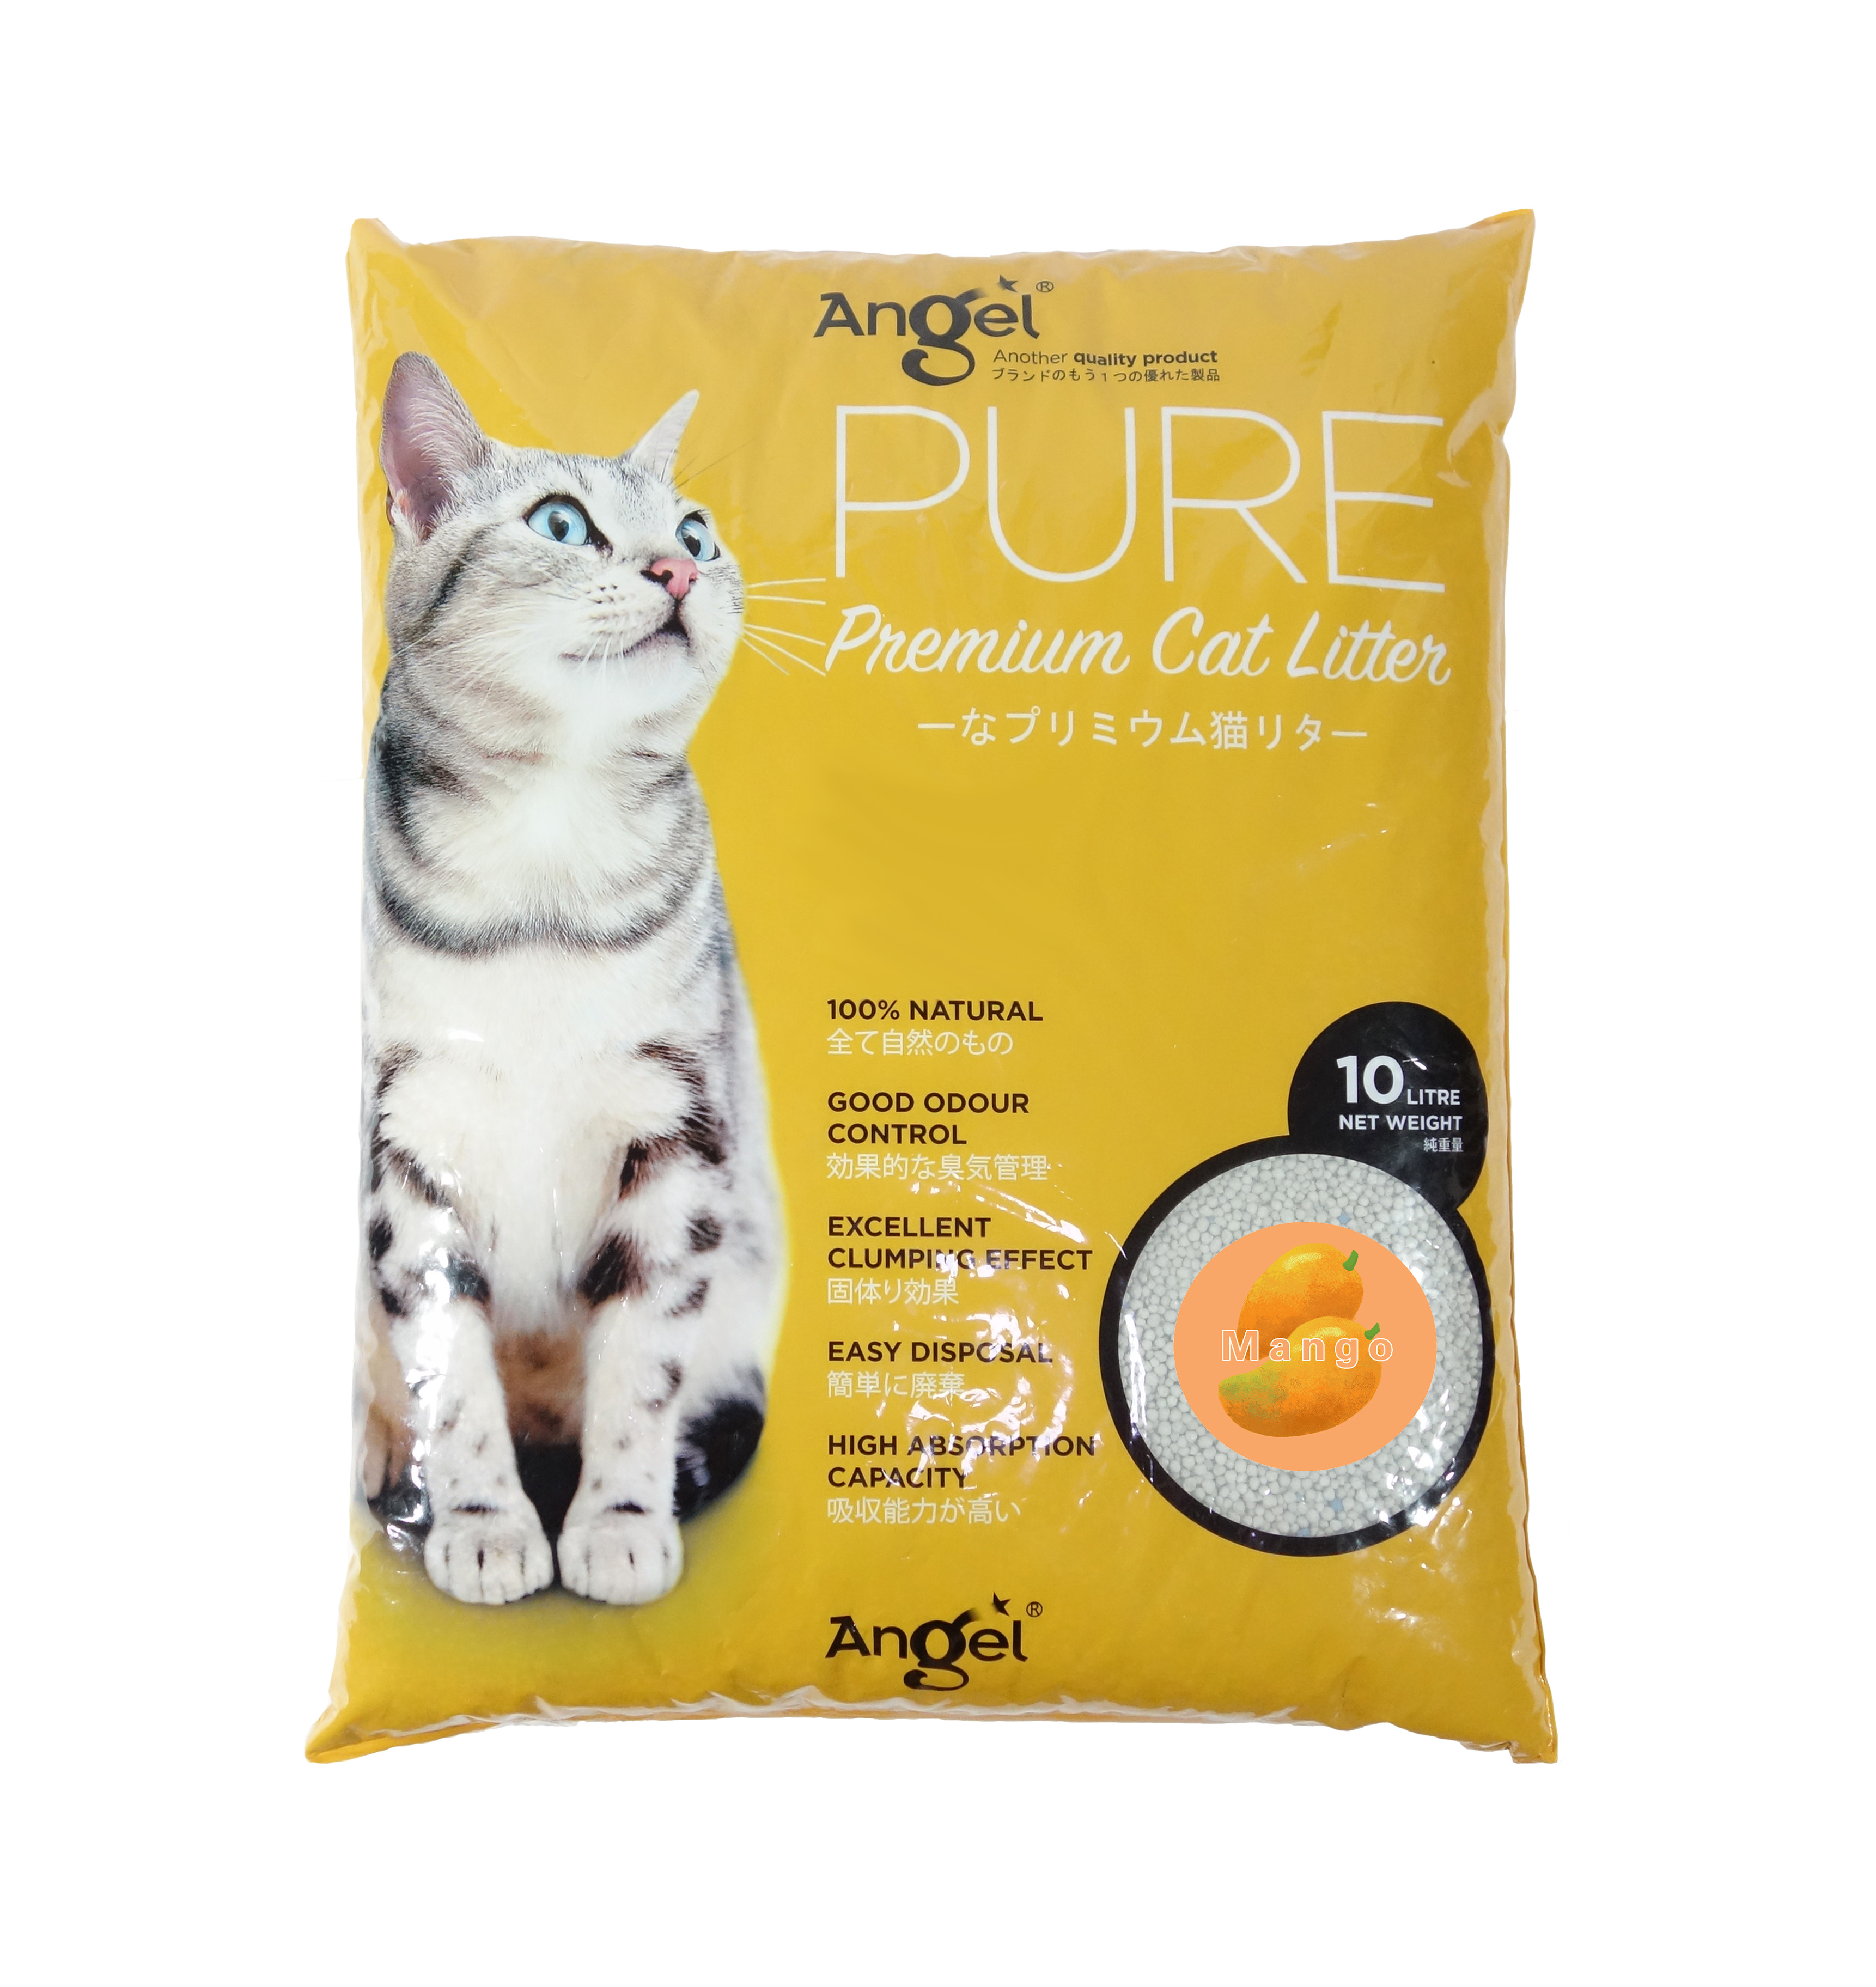 Angel Pure Premium Cat Litter 10L Mango Scented